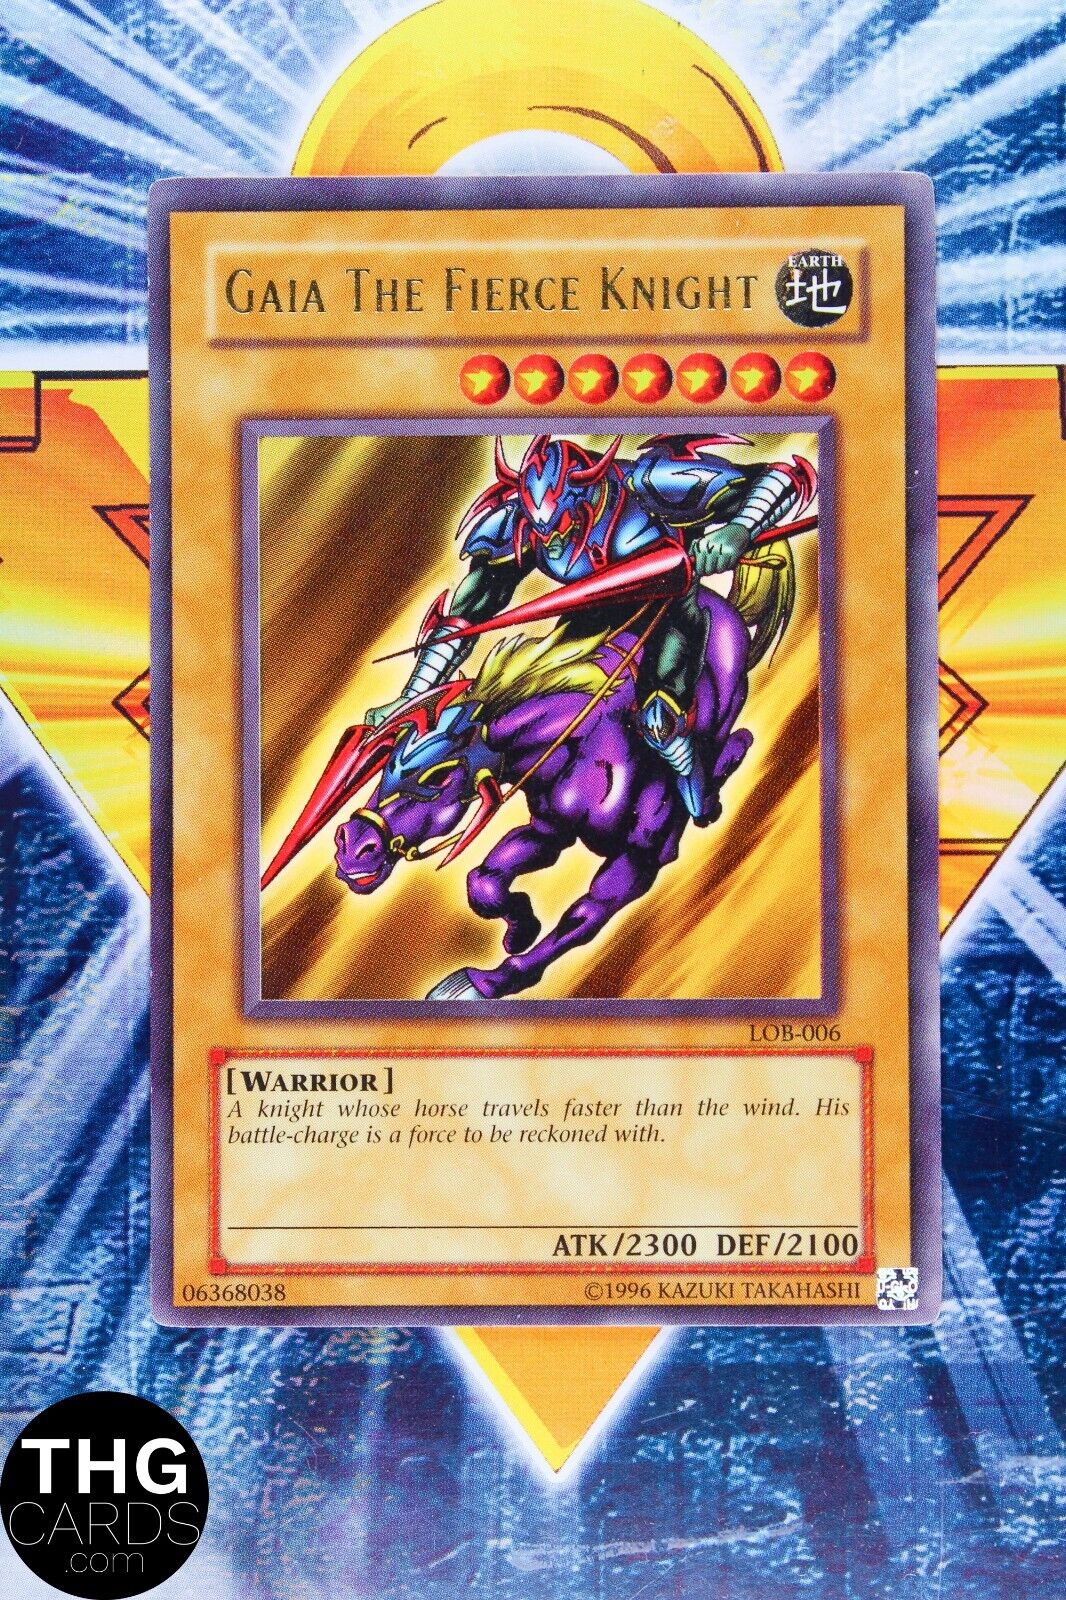 Gaia the Fierce Knight LOB-006 Ultra Rare Yugioh Card 1